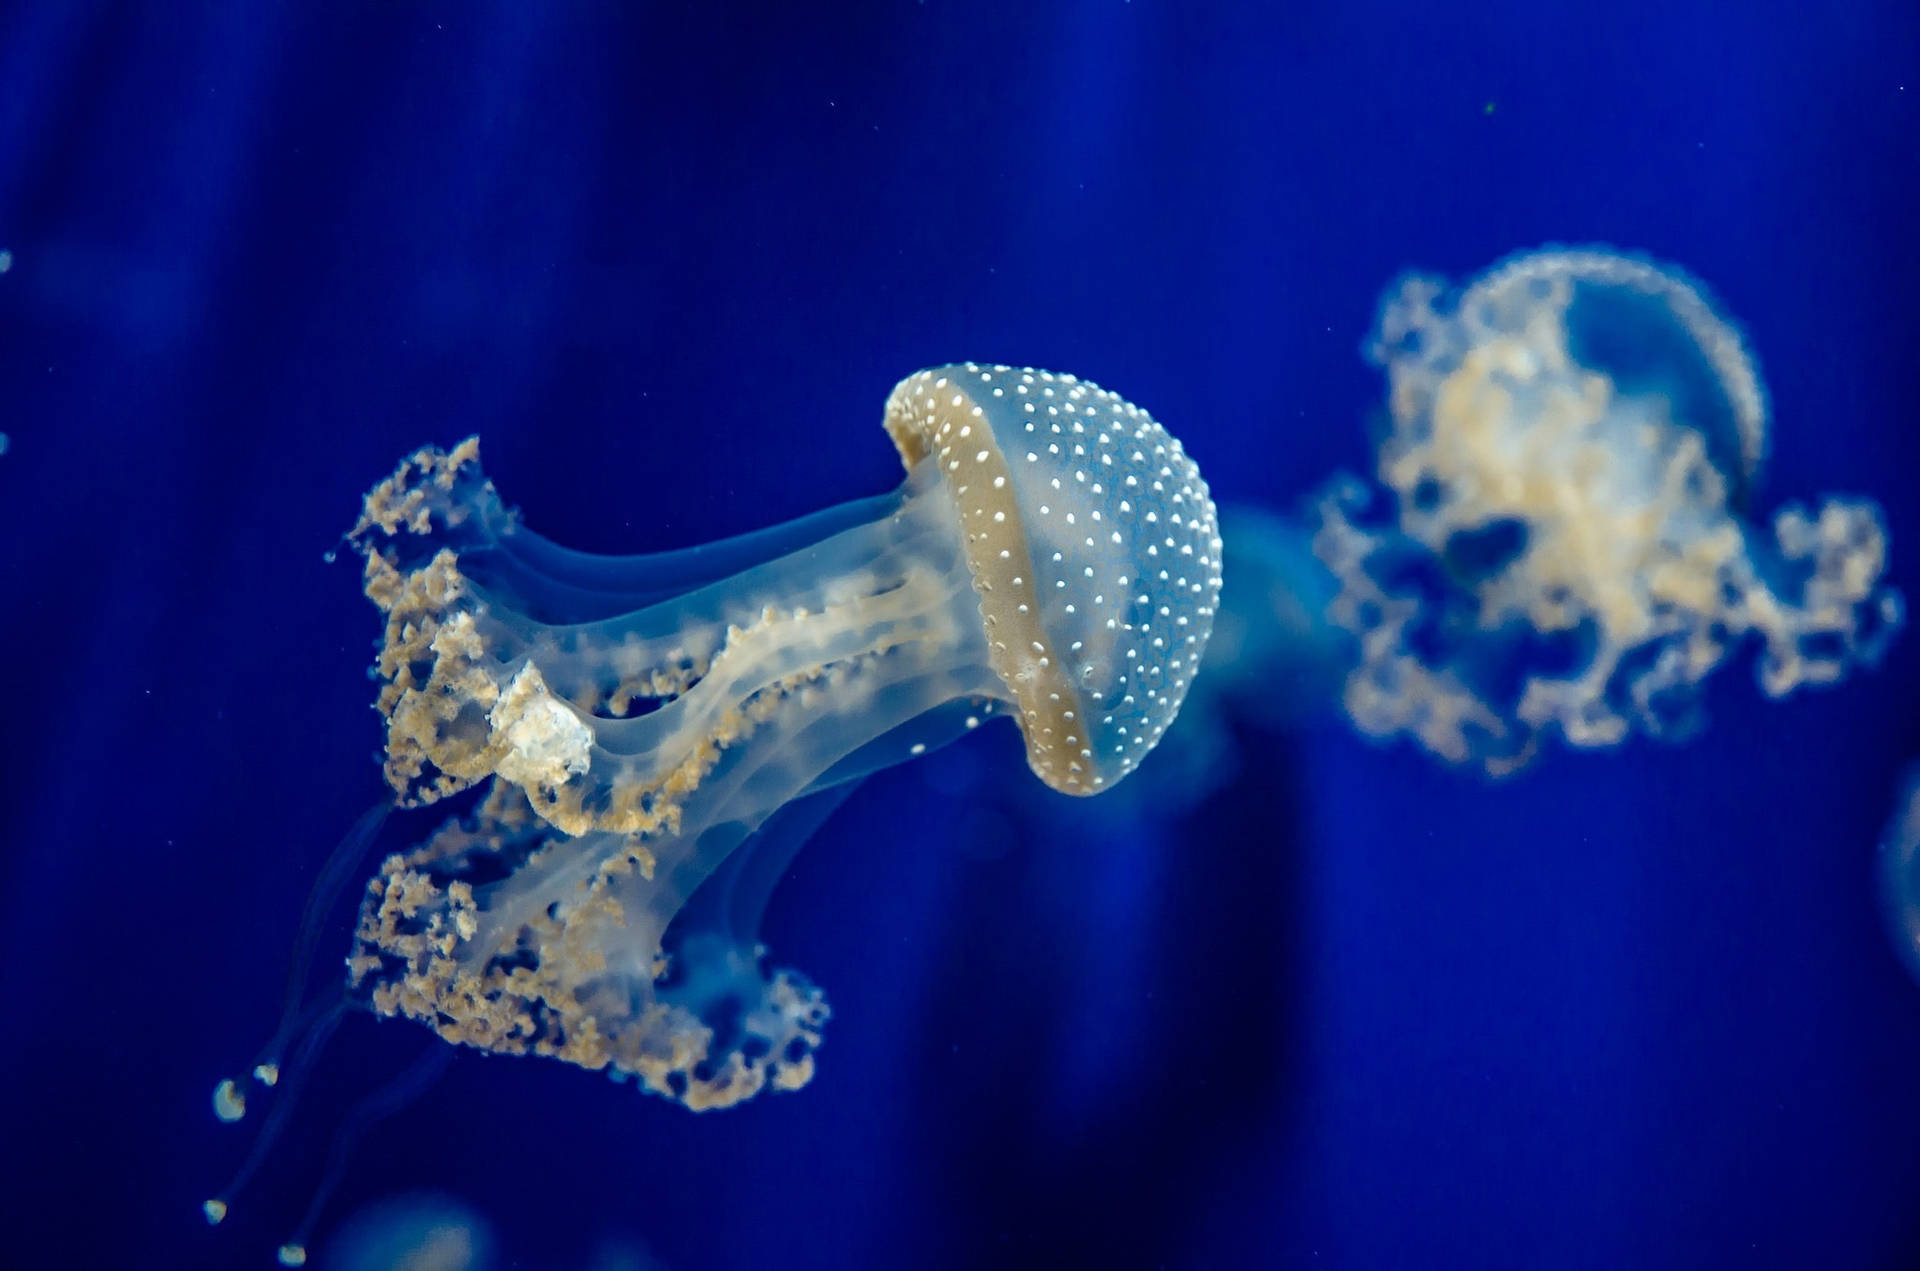 Brown Spotted Jellyfish In Blue Underwater Background